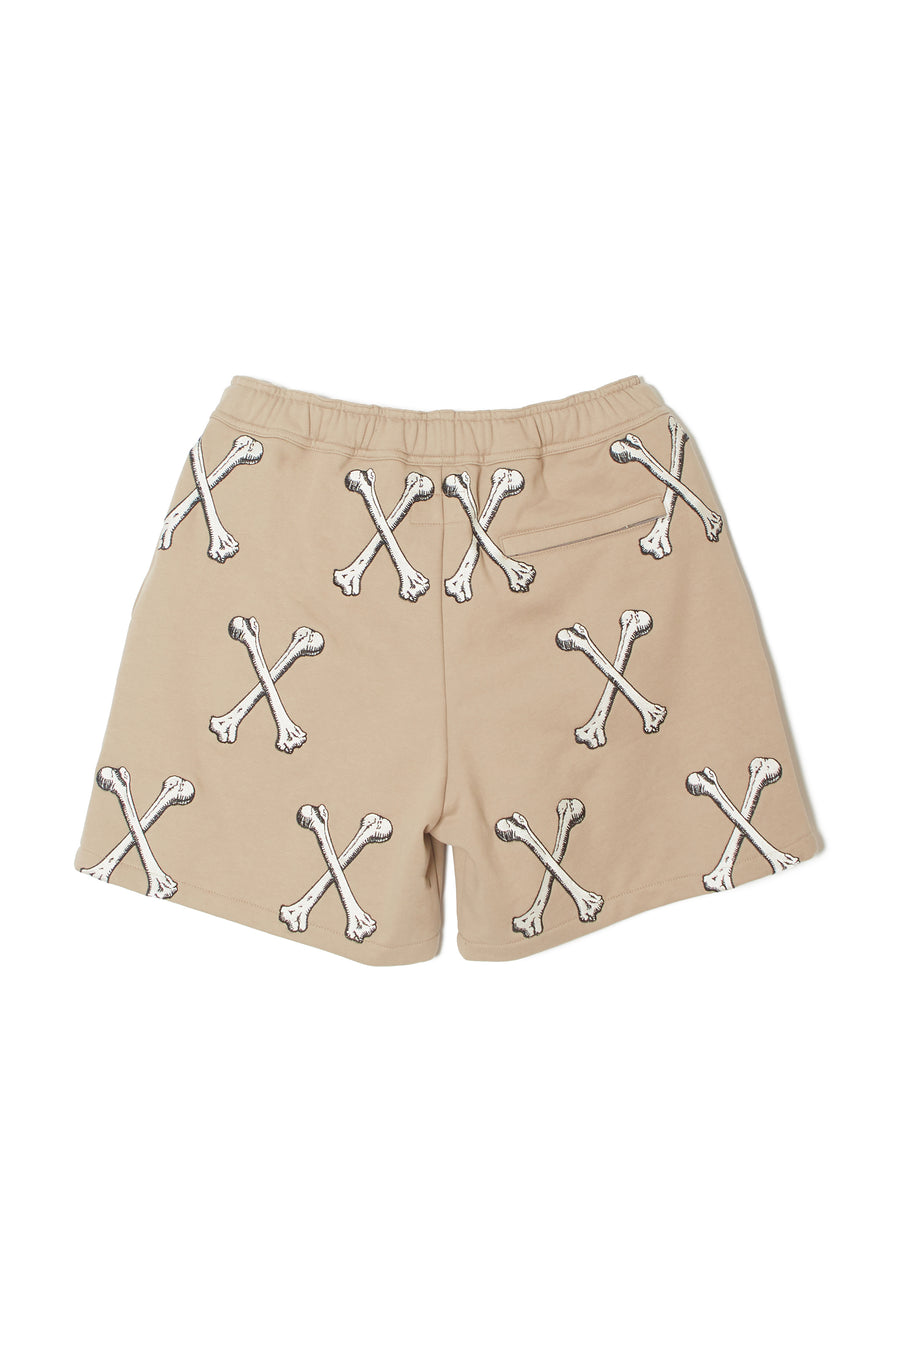 MAYO CROSS BONES Embroidery Sweat Shorts - BEIGE